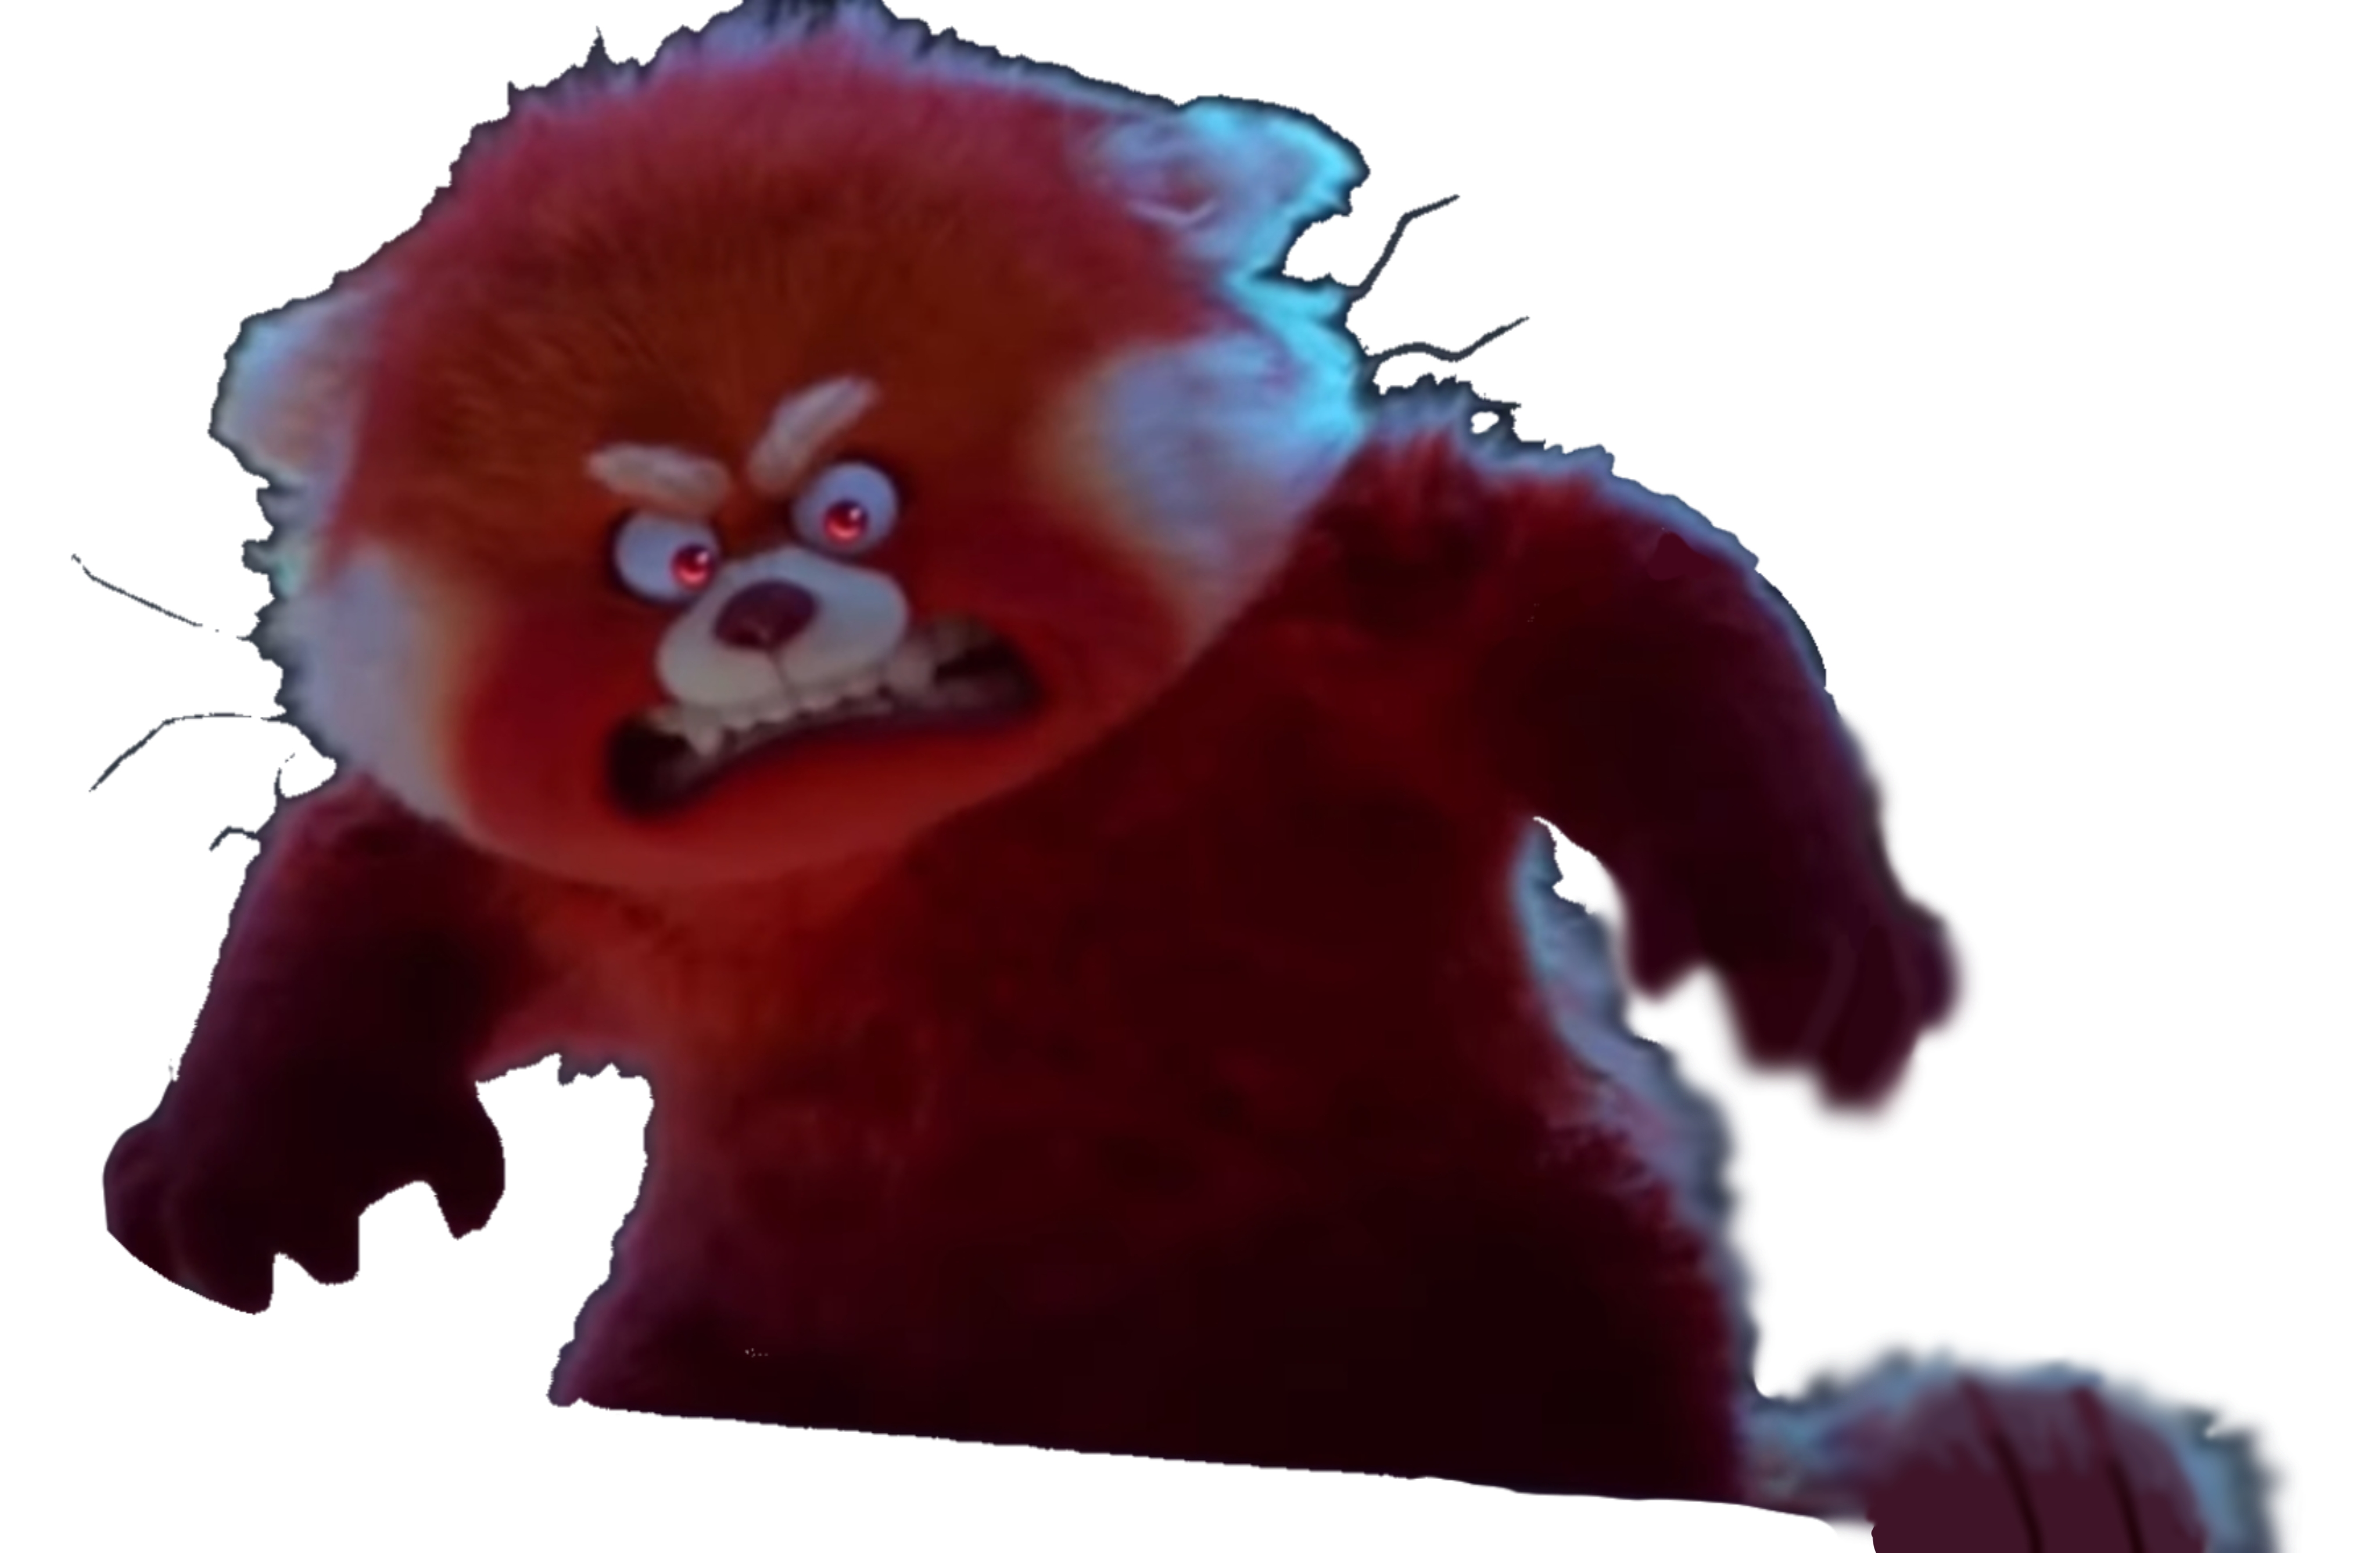 Angry Meilin Lee Red Panda by roaldmt on DeviantArt